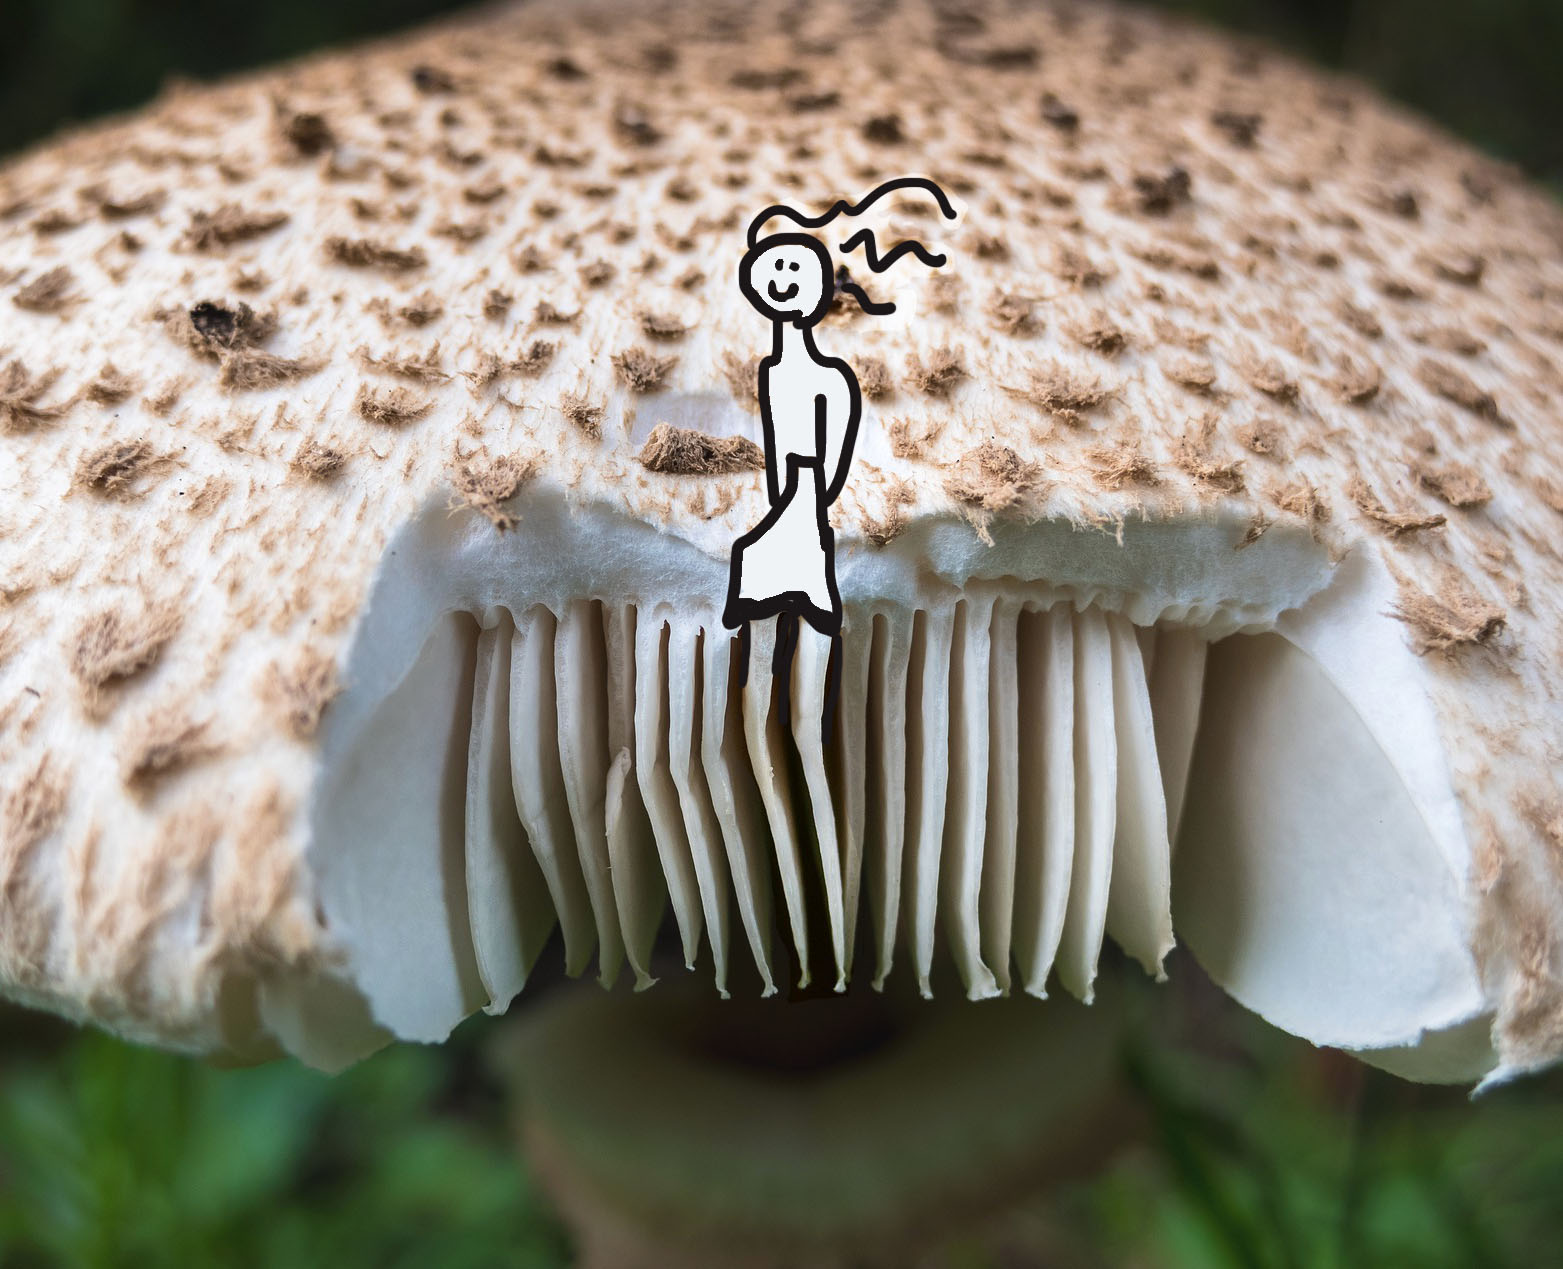 art every day number 550 doodle mushroom legs